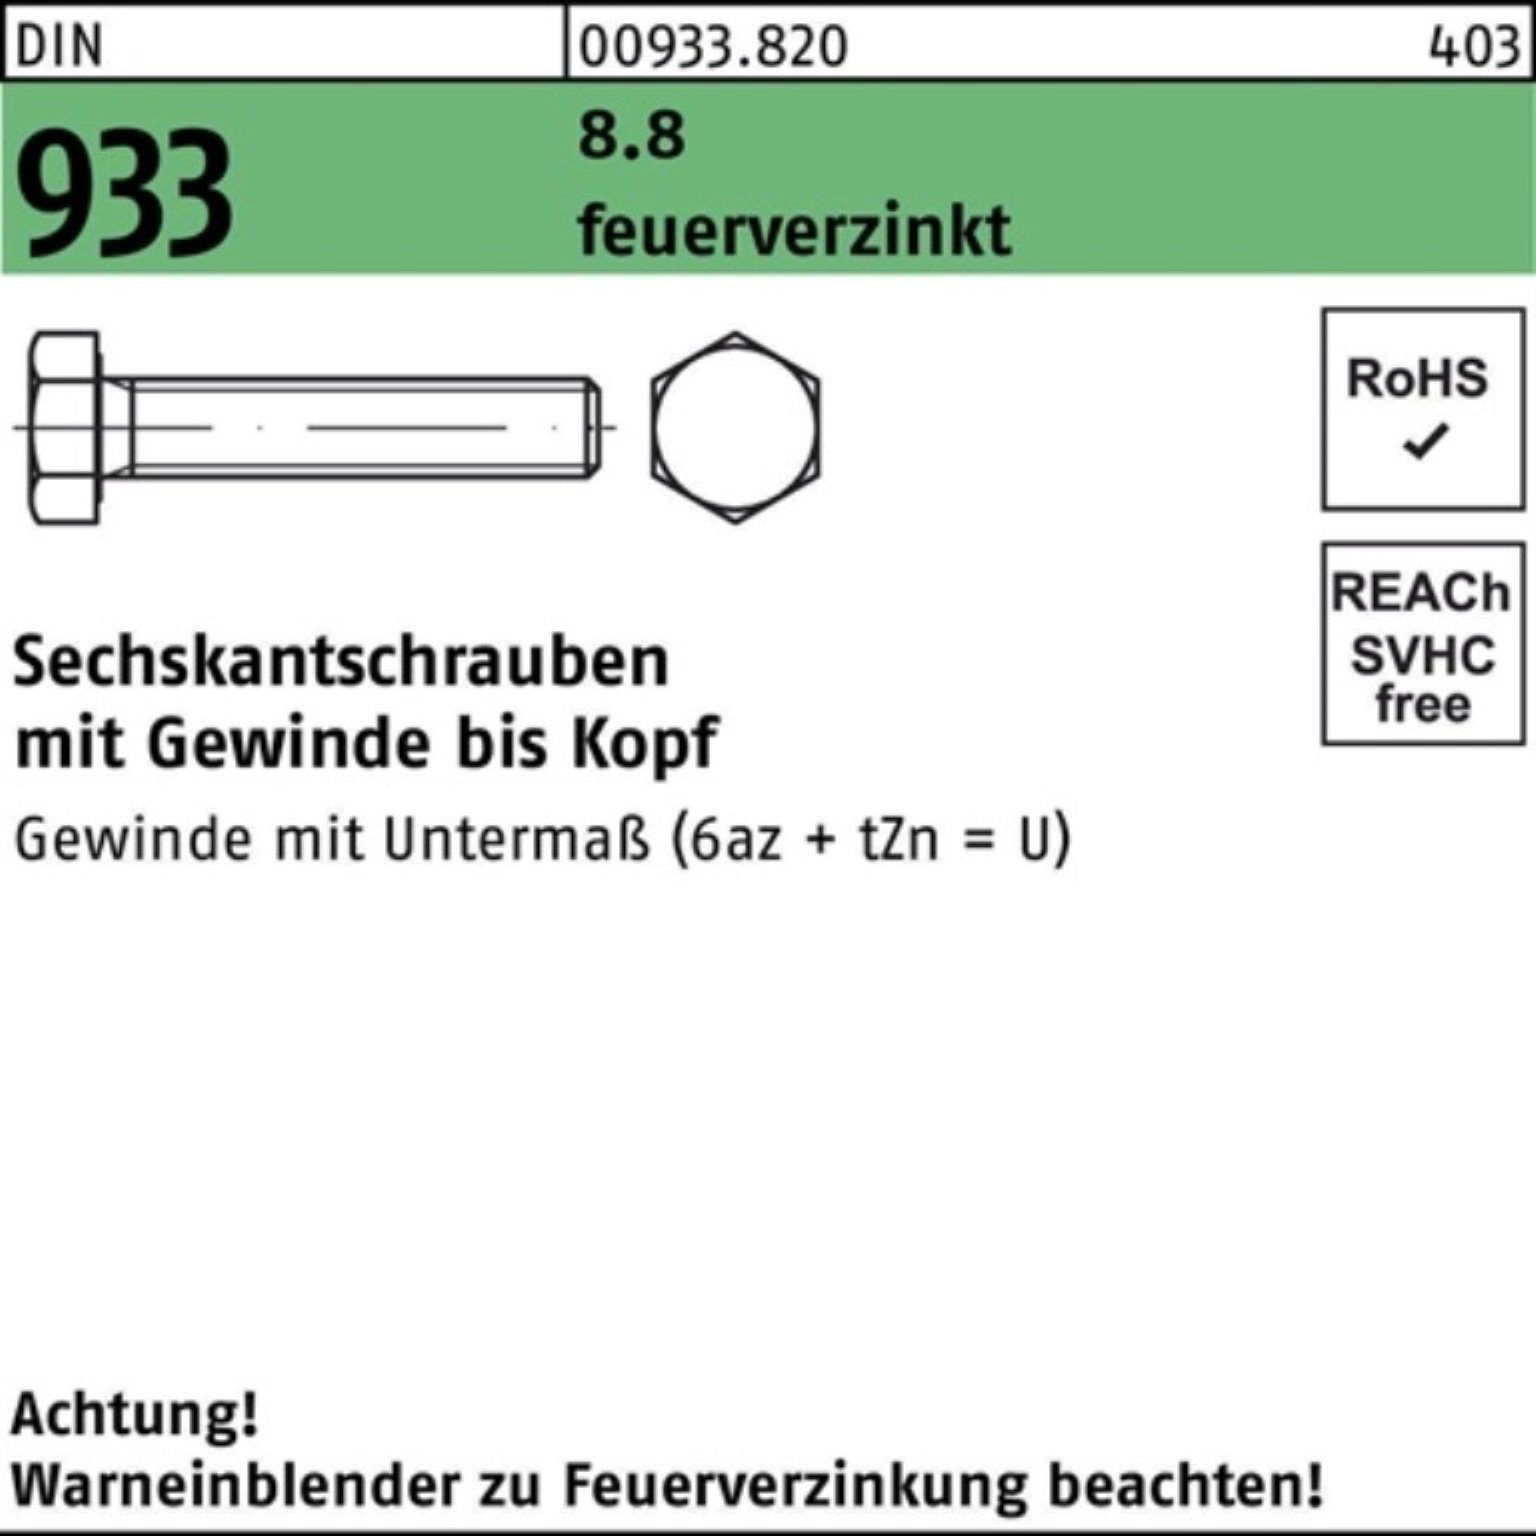 Pack feuerverz. Sechskantschraube Stü 8.8 200er VG Reyher Sechskantschraube 933 DIN M8x 16 200